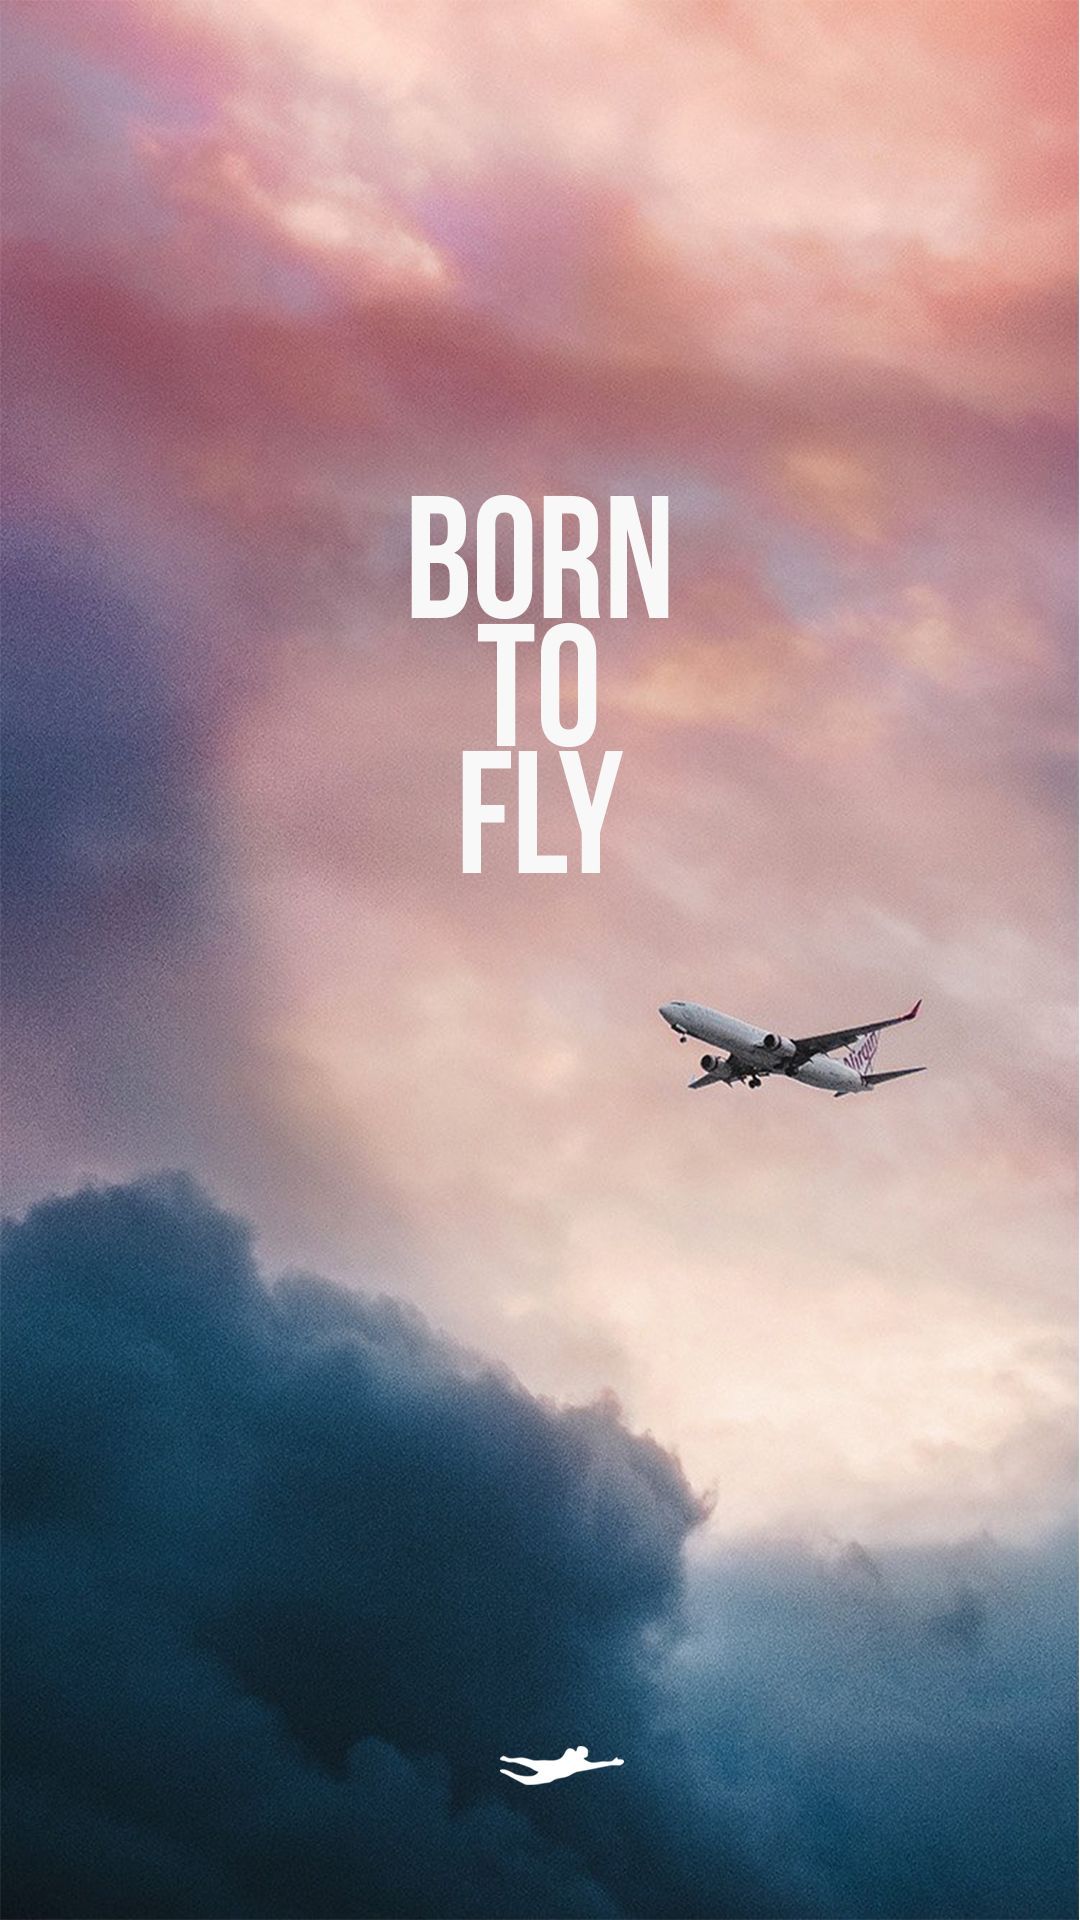 Born to fly. Goalkeeper Lifestyle. Airplane